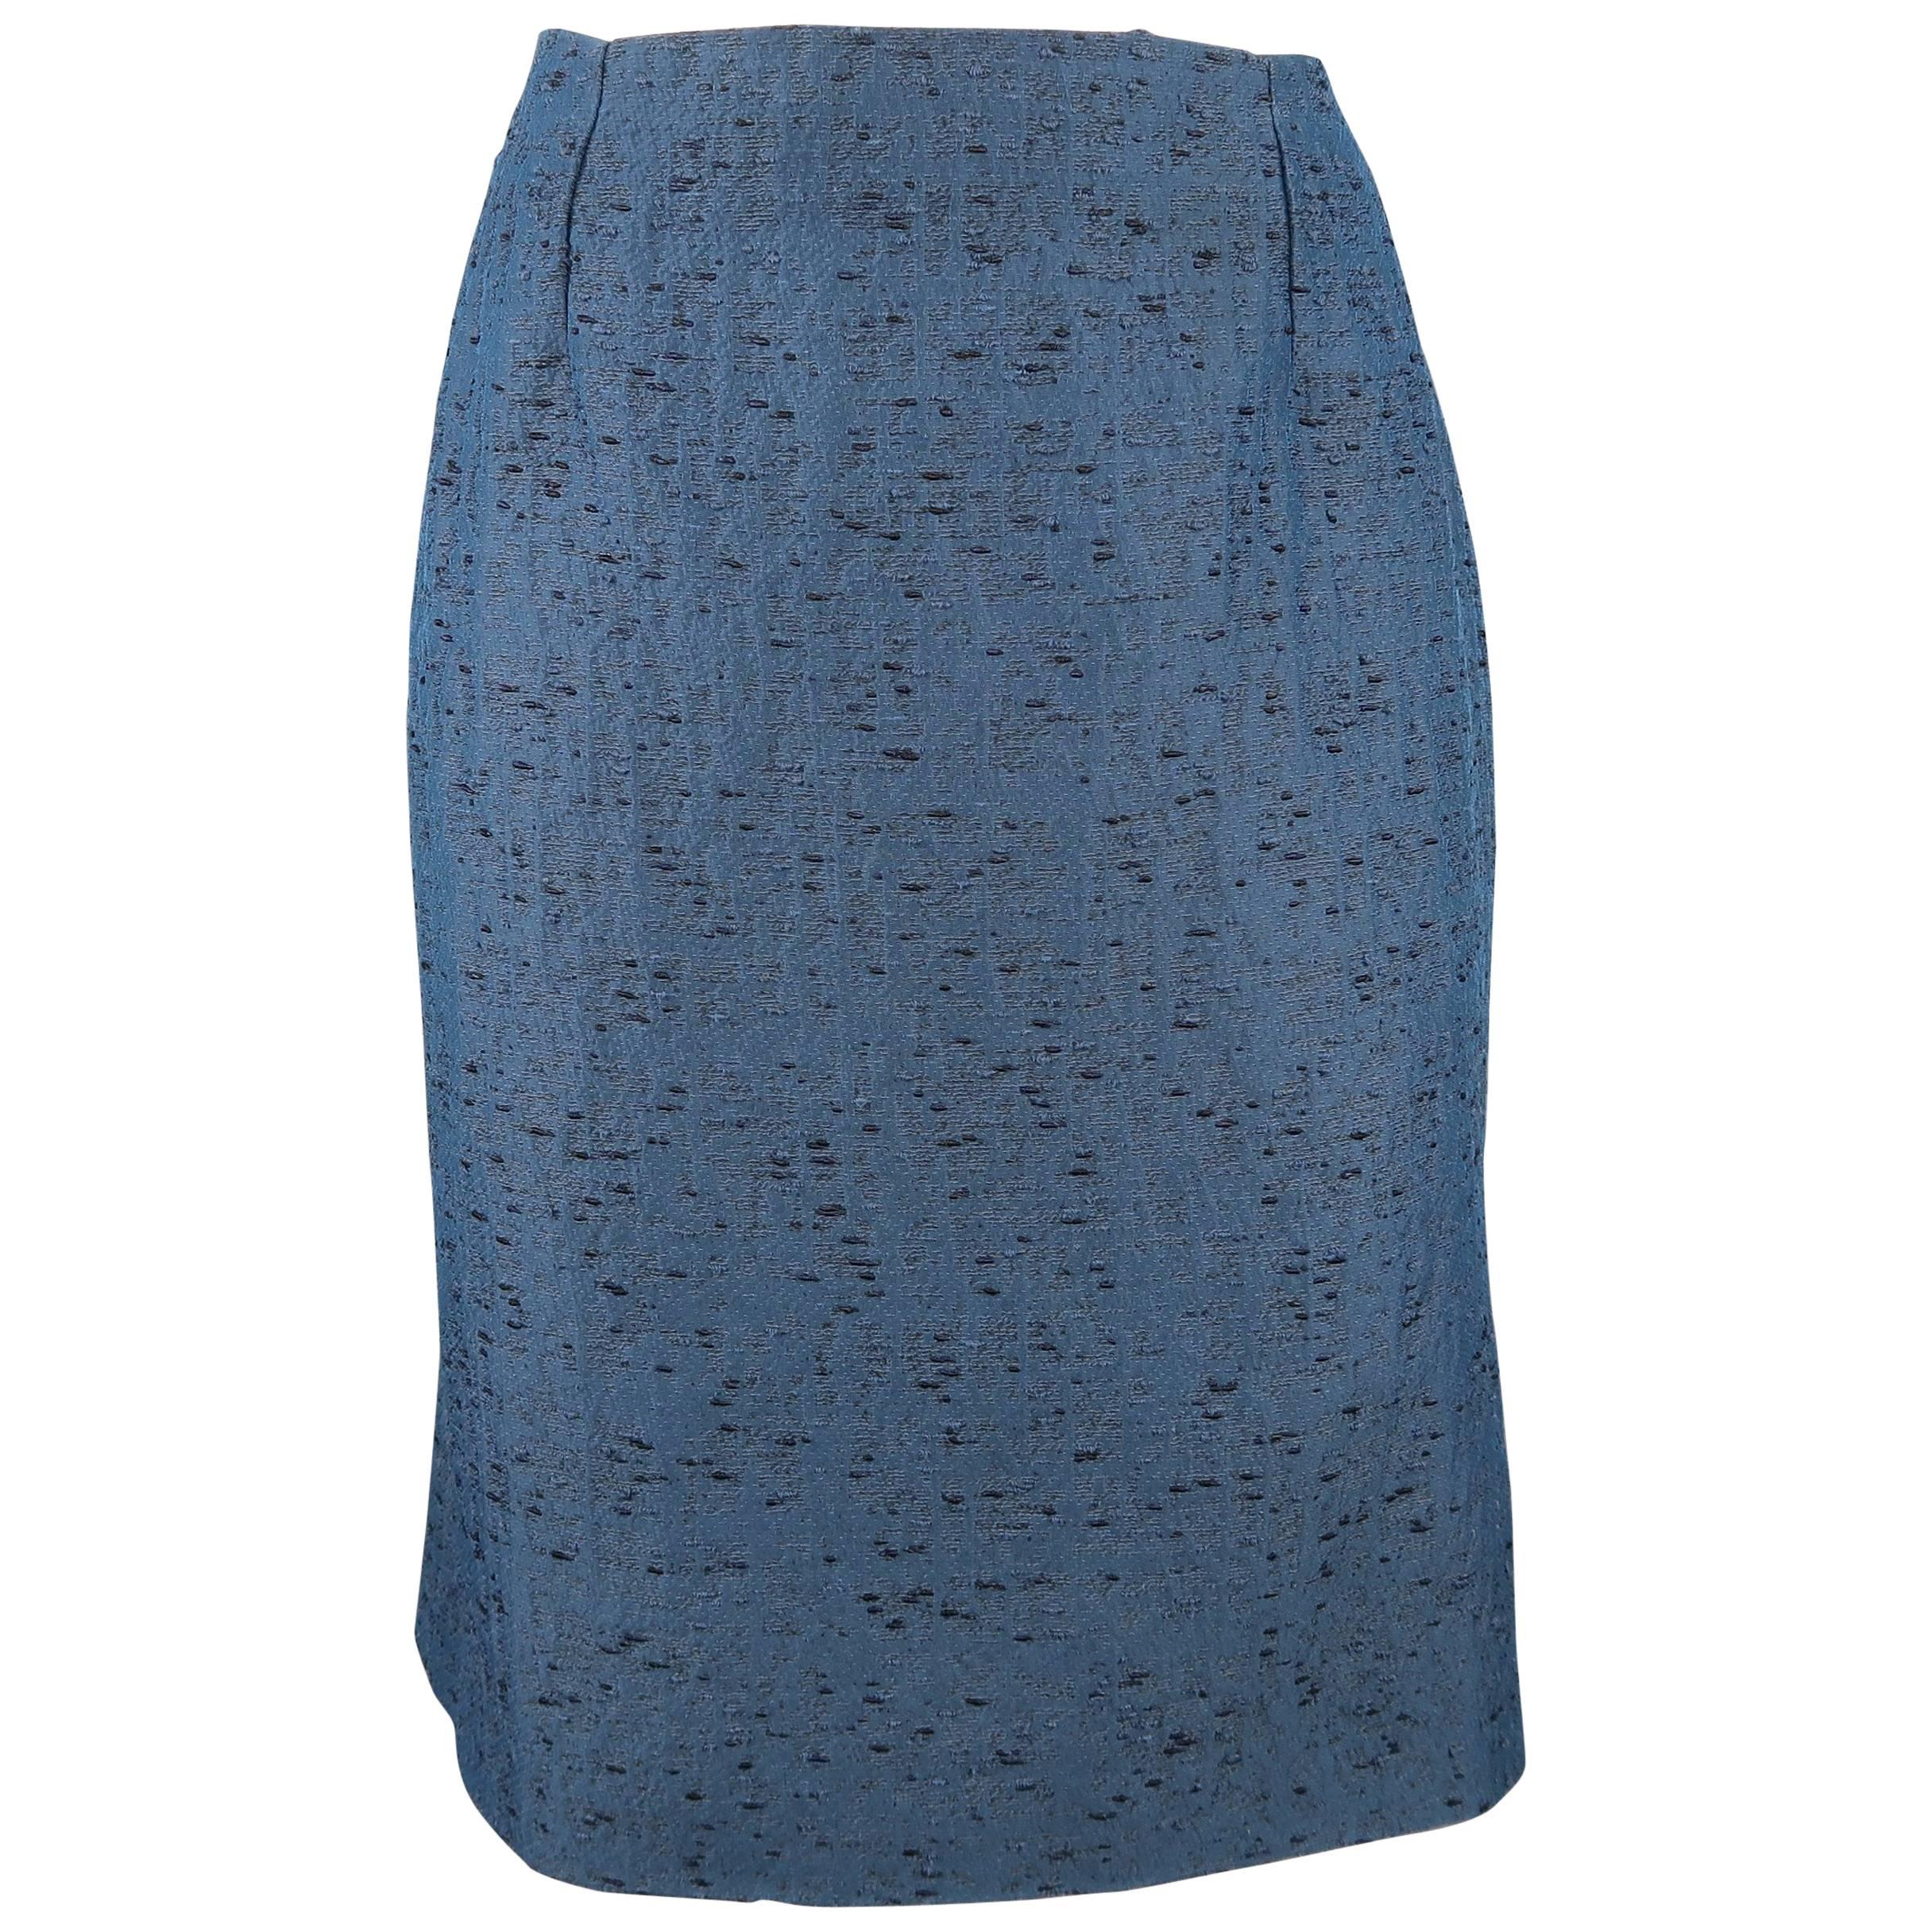  VALENTINO Size 6 Blue Textured Taffeta Pencil Skirt